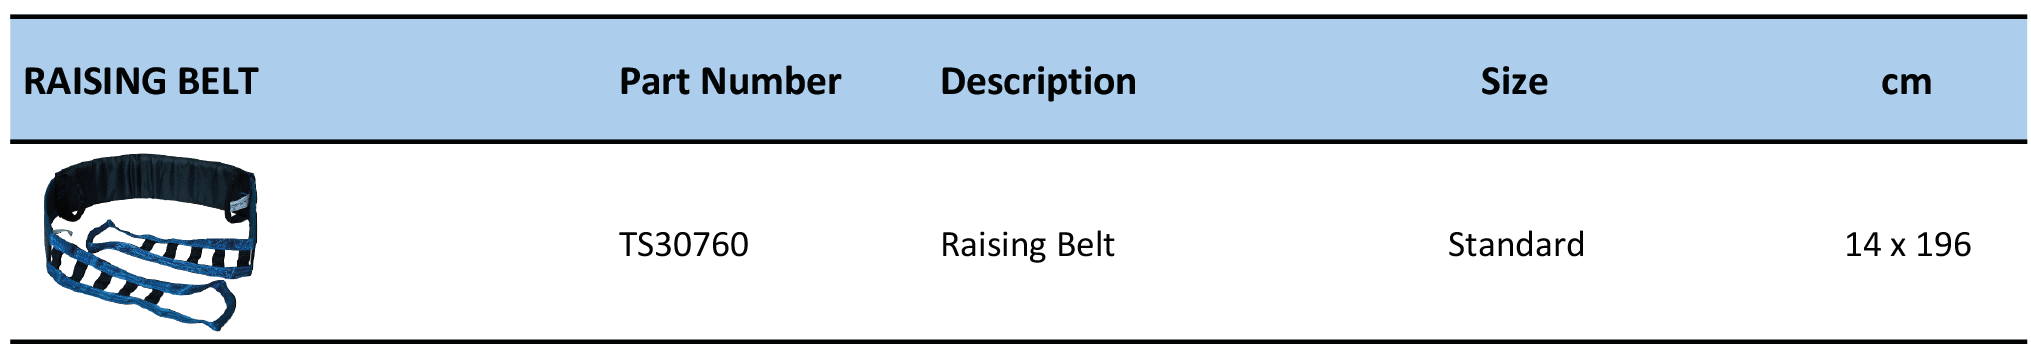 transfer-raising-belt-20200522.png